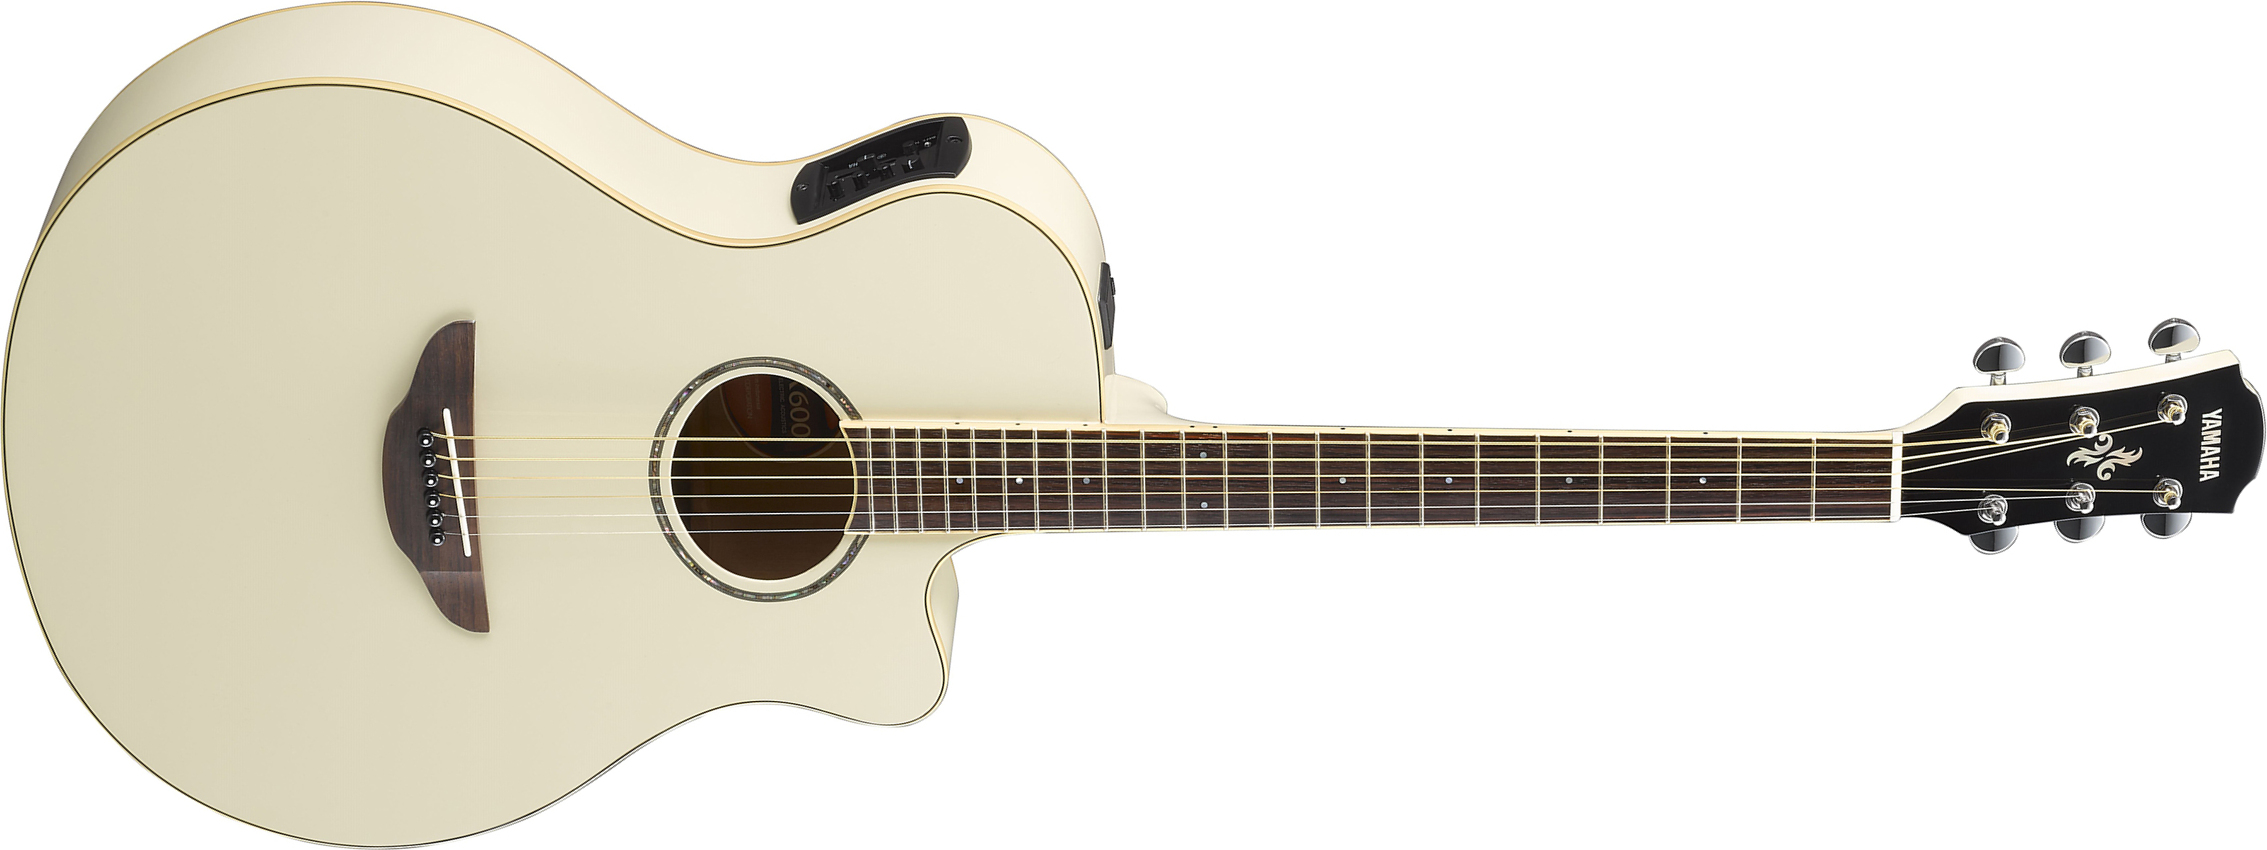 Yamaha Apx600 Concert Slim Cw Epicea Nato Rw - Vintage White - Electro acoustic guitar - Main picture